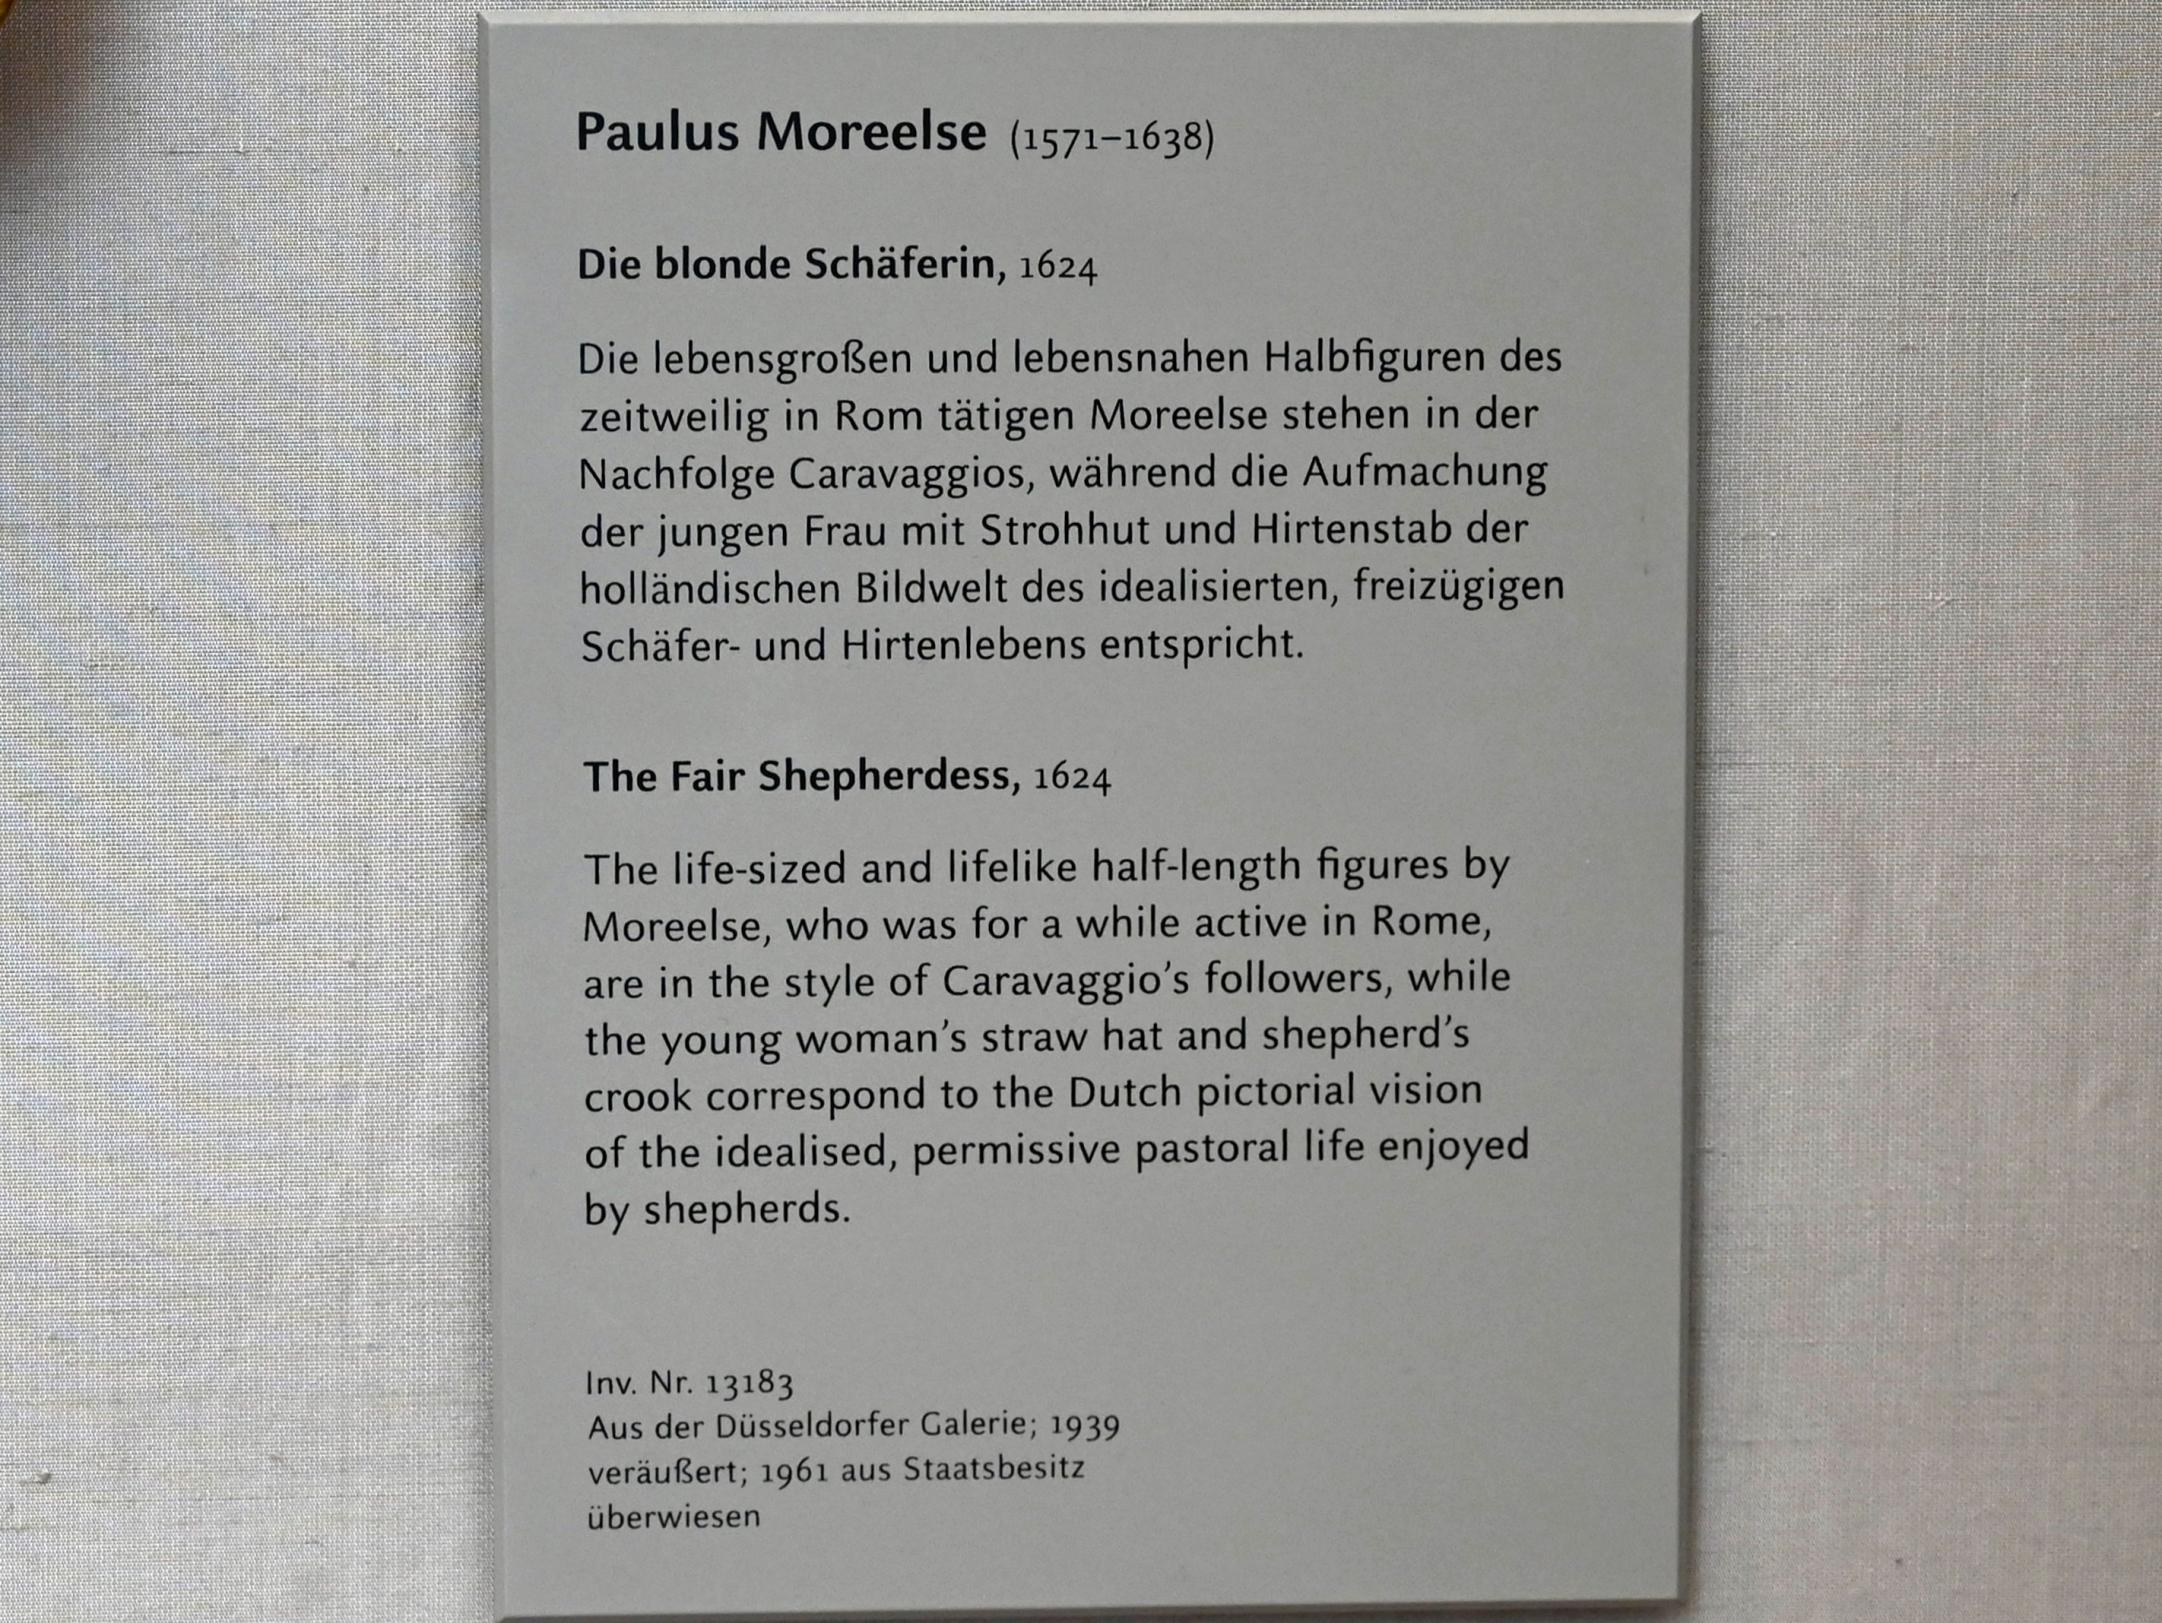 Paulus Moreelse (1624), Die blonde Schäferin, München, Alte Pinakothek, Obergeschoss Kabinett 14, 1624, Bild 2/3